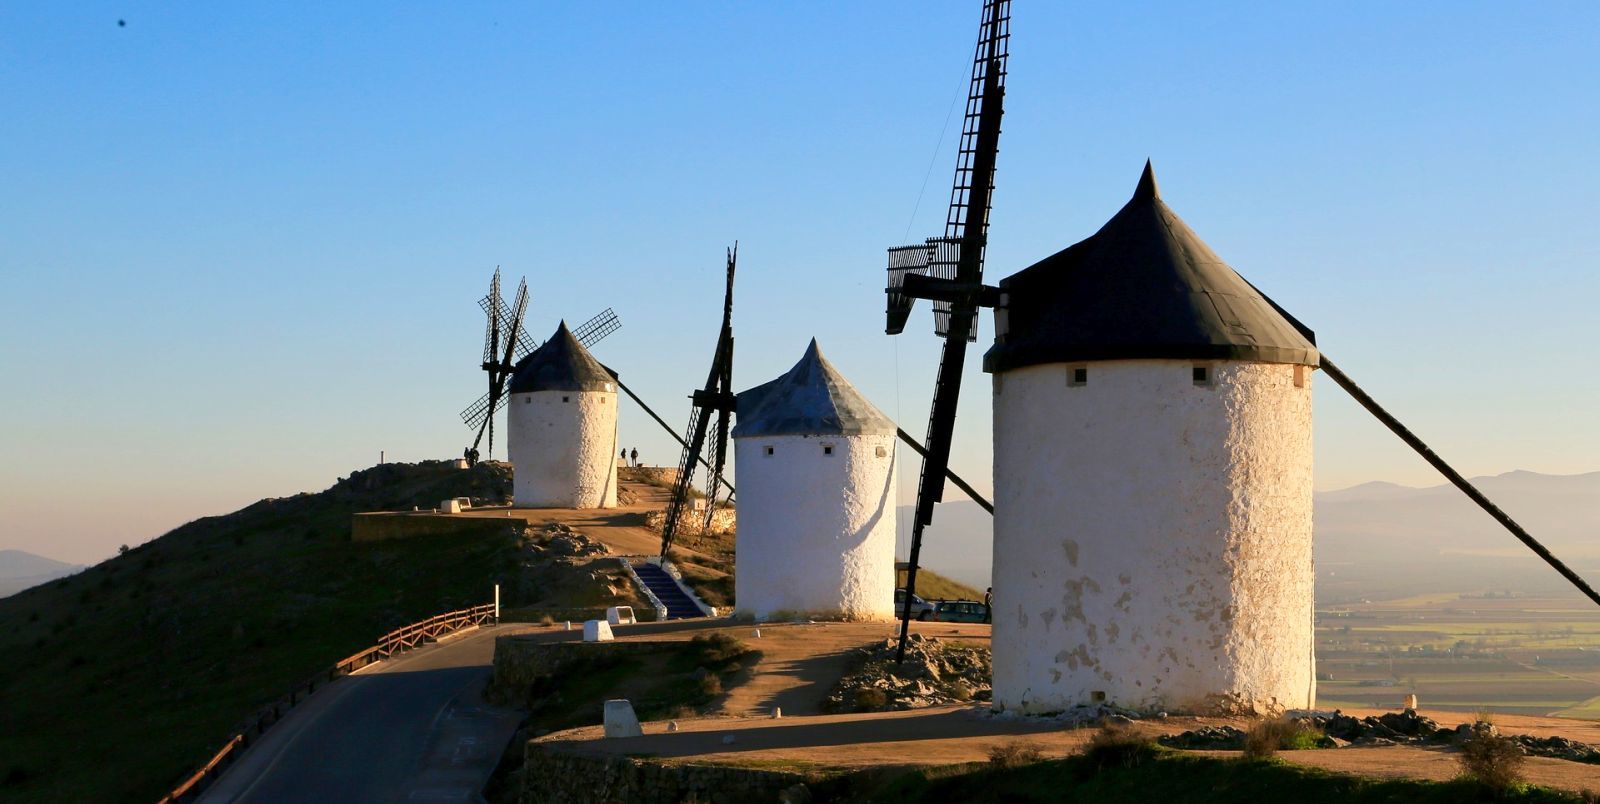 Hoteles Centro de España - Conoce a los gigantes de Don Quijote